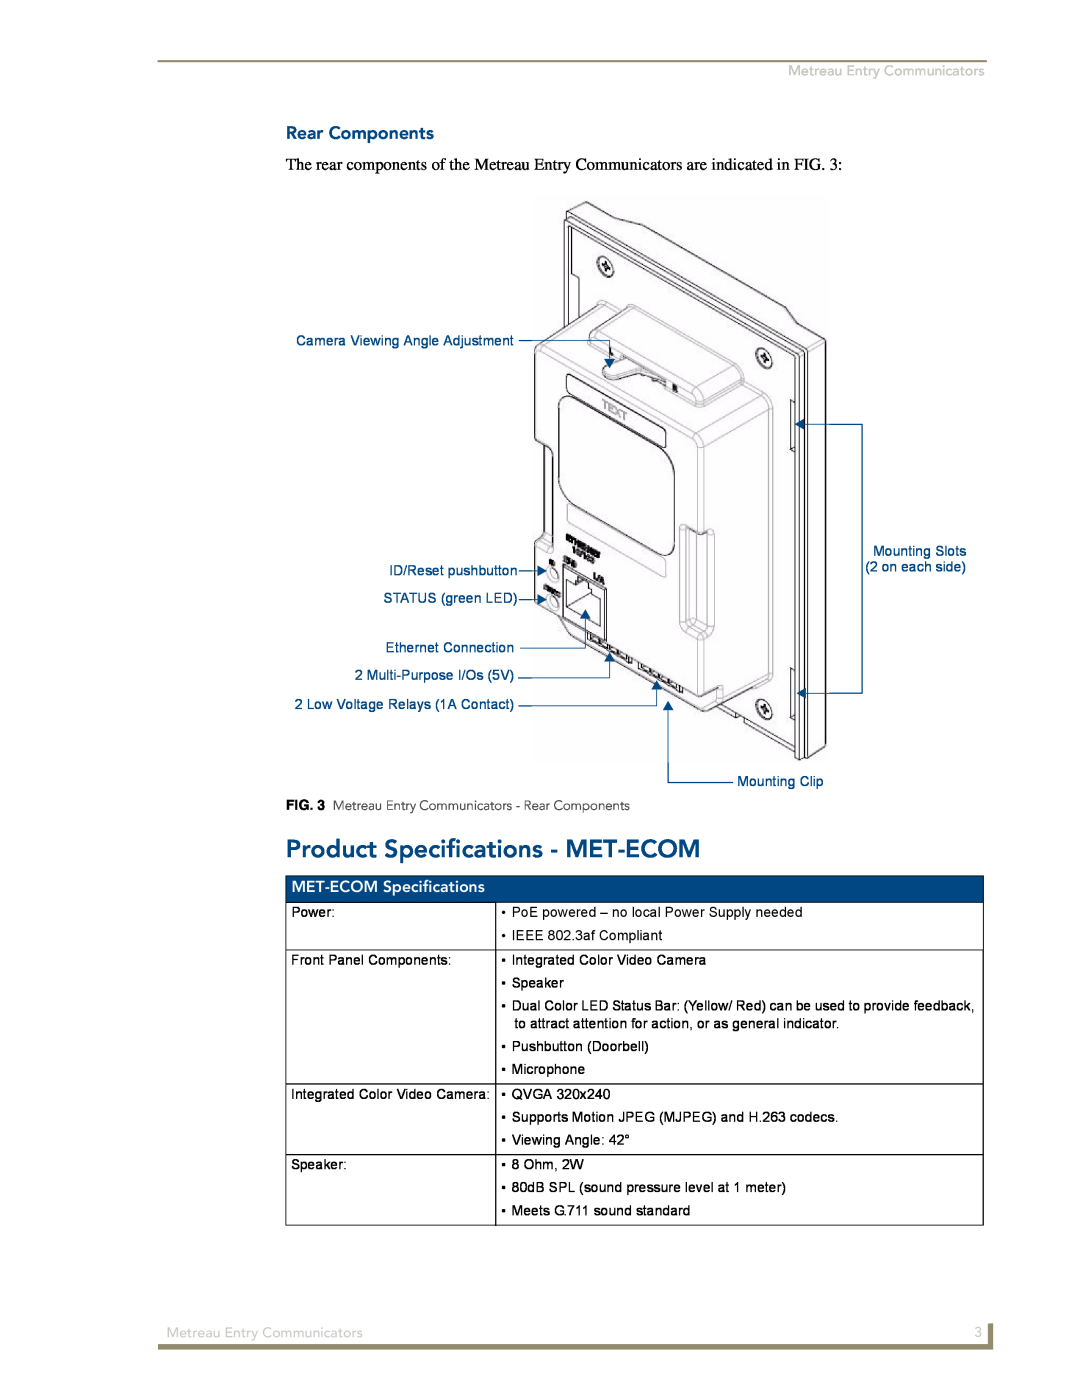 AMX MET-ECOM-D Product Specifications - MET-ECOM, Rear Components, MET-ECOMSpecifications, Metreau Entry Communicators 